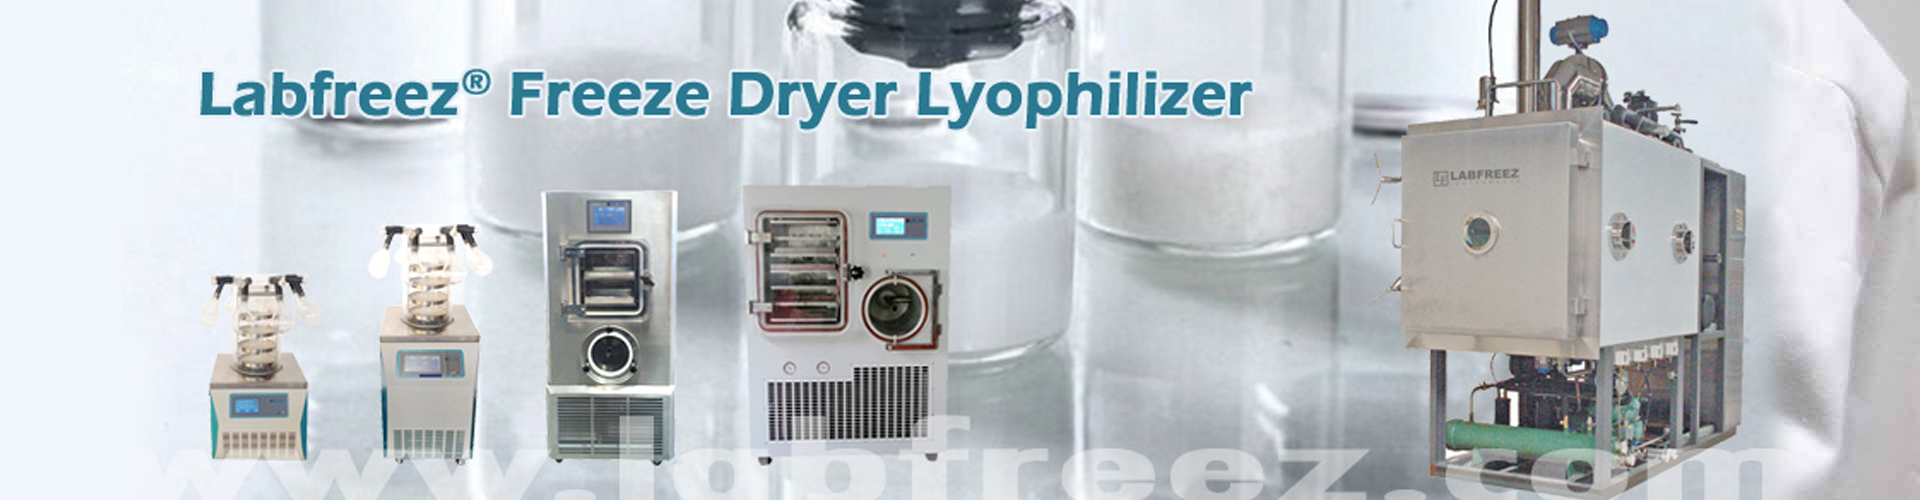 freeze-dryer-lyophilizer-labfreez-banner